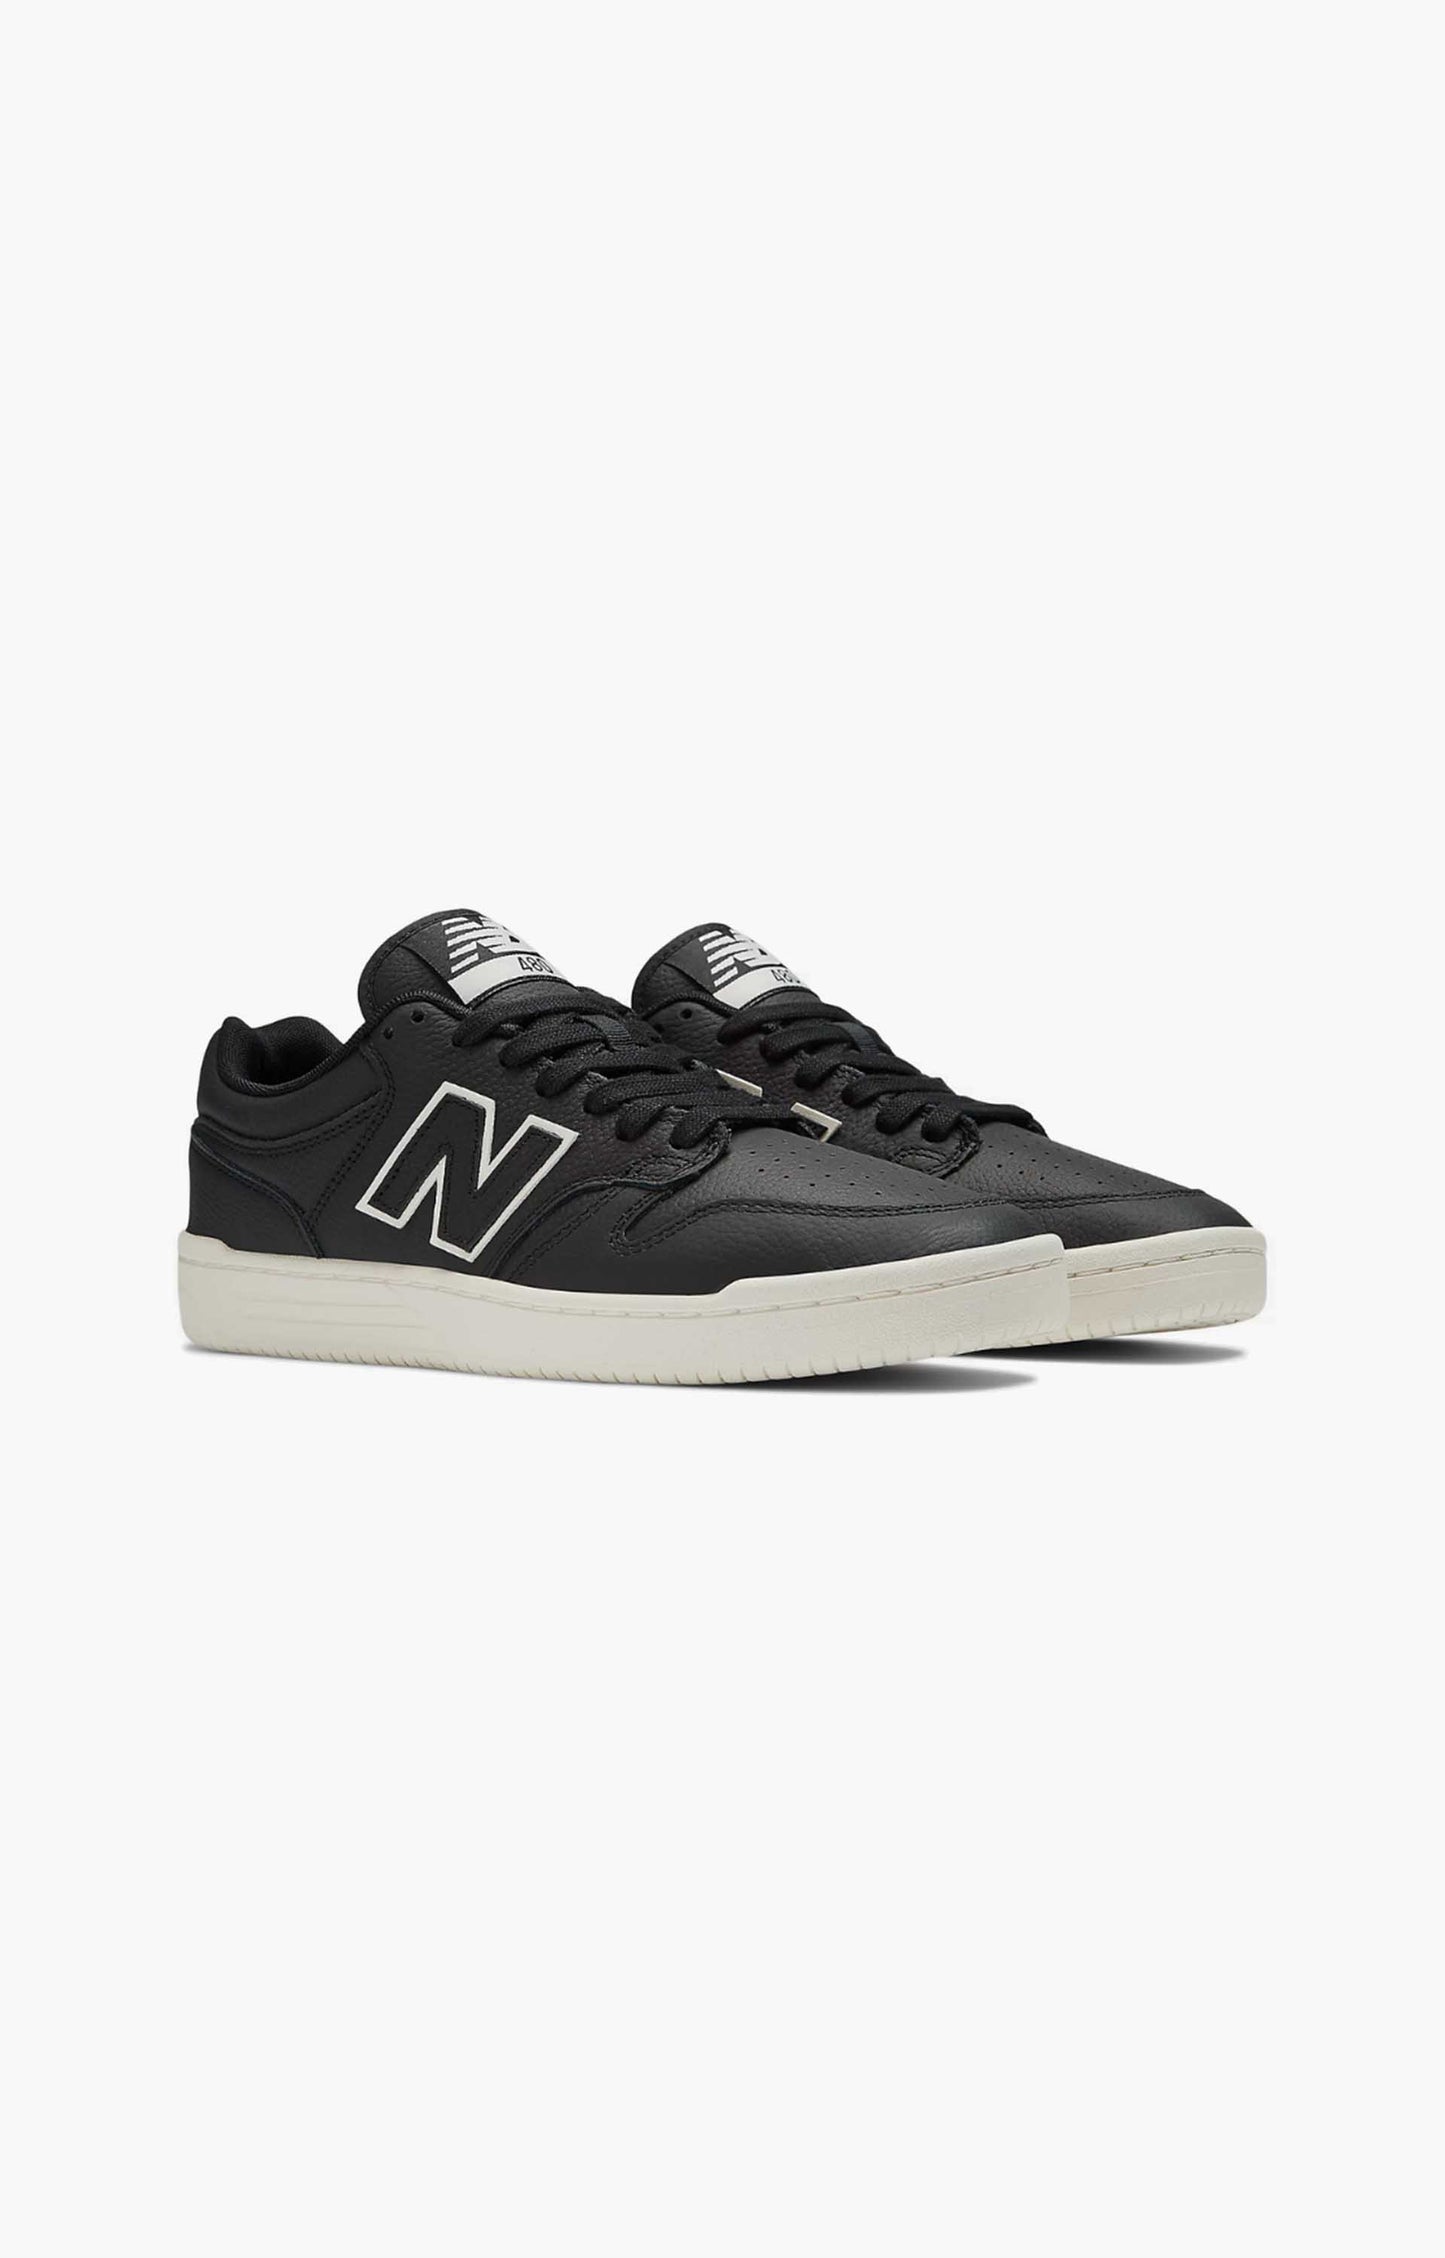 New Balance Numeric NM480YIN Shoe, Black/Sea Salt